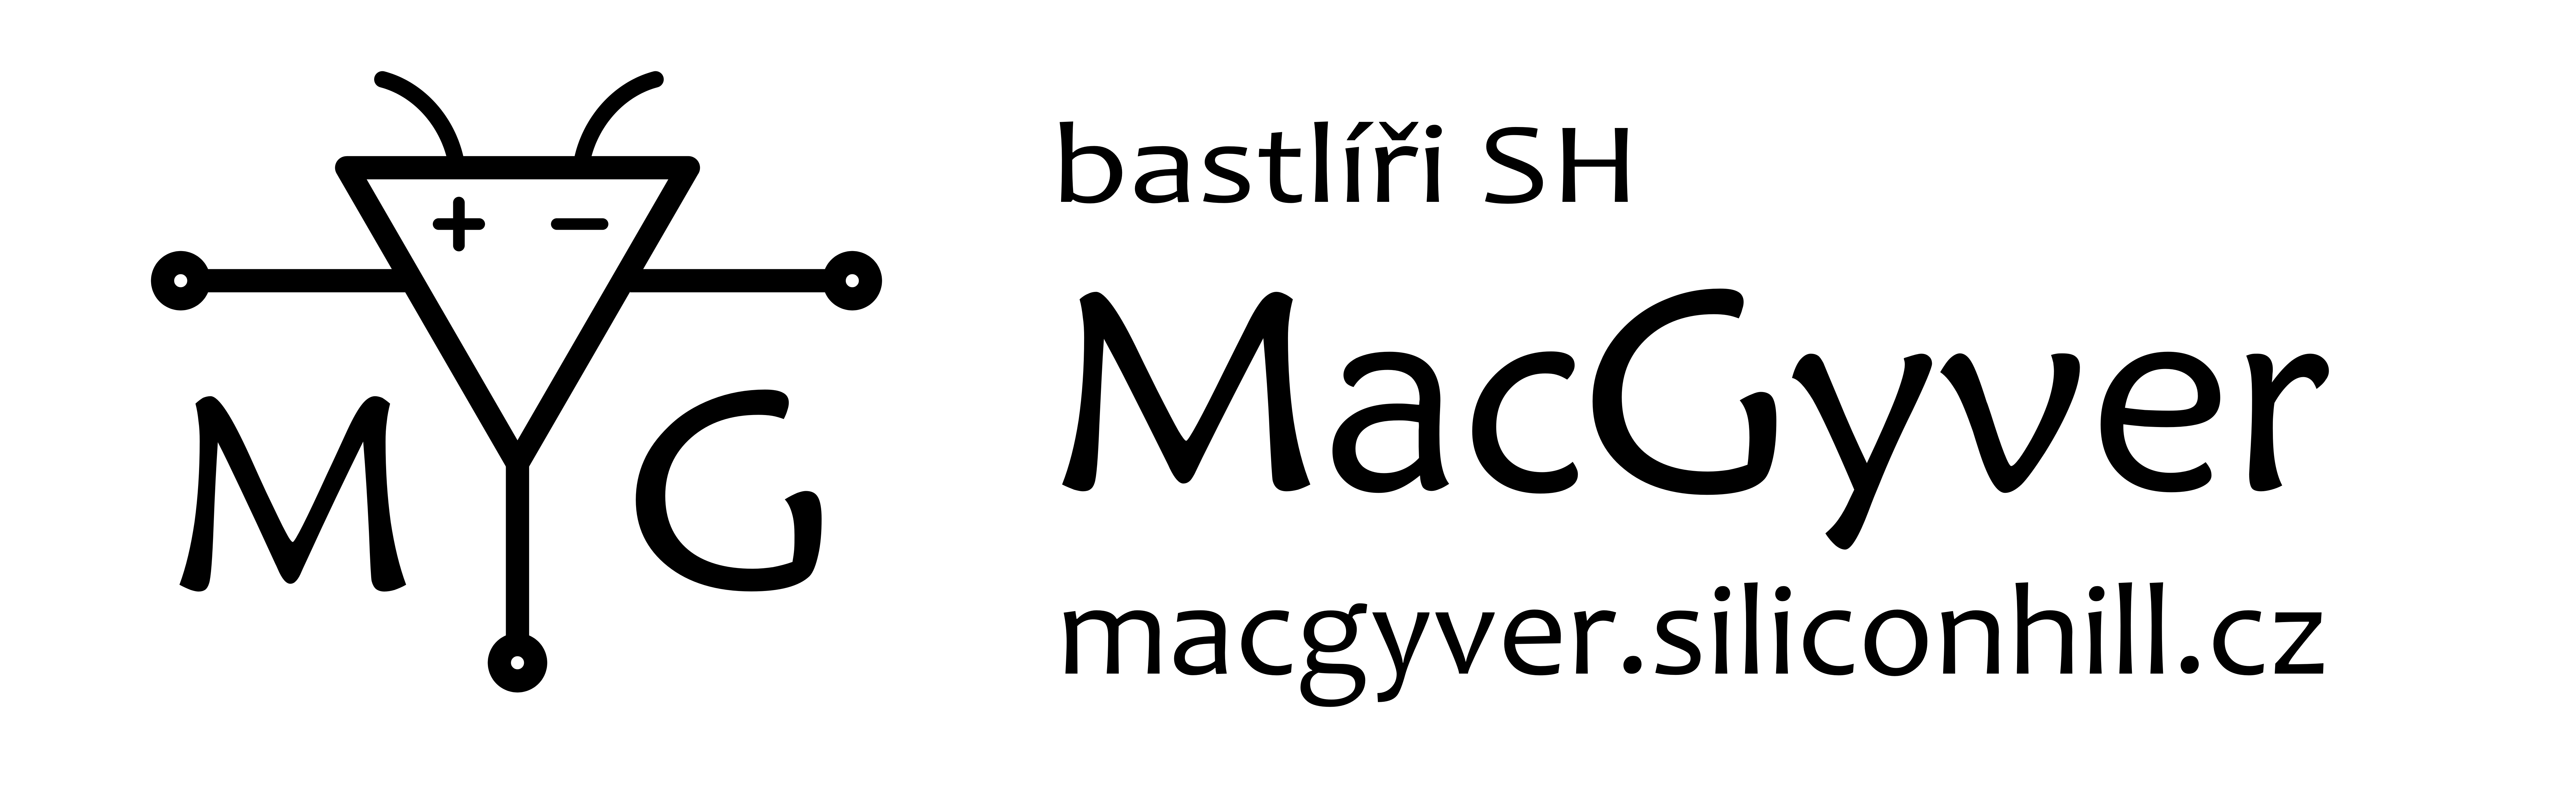 klub:projekty:bastlirna:logo-silicon-hill-bastlirna-macgyver.png